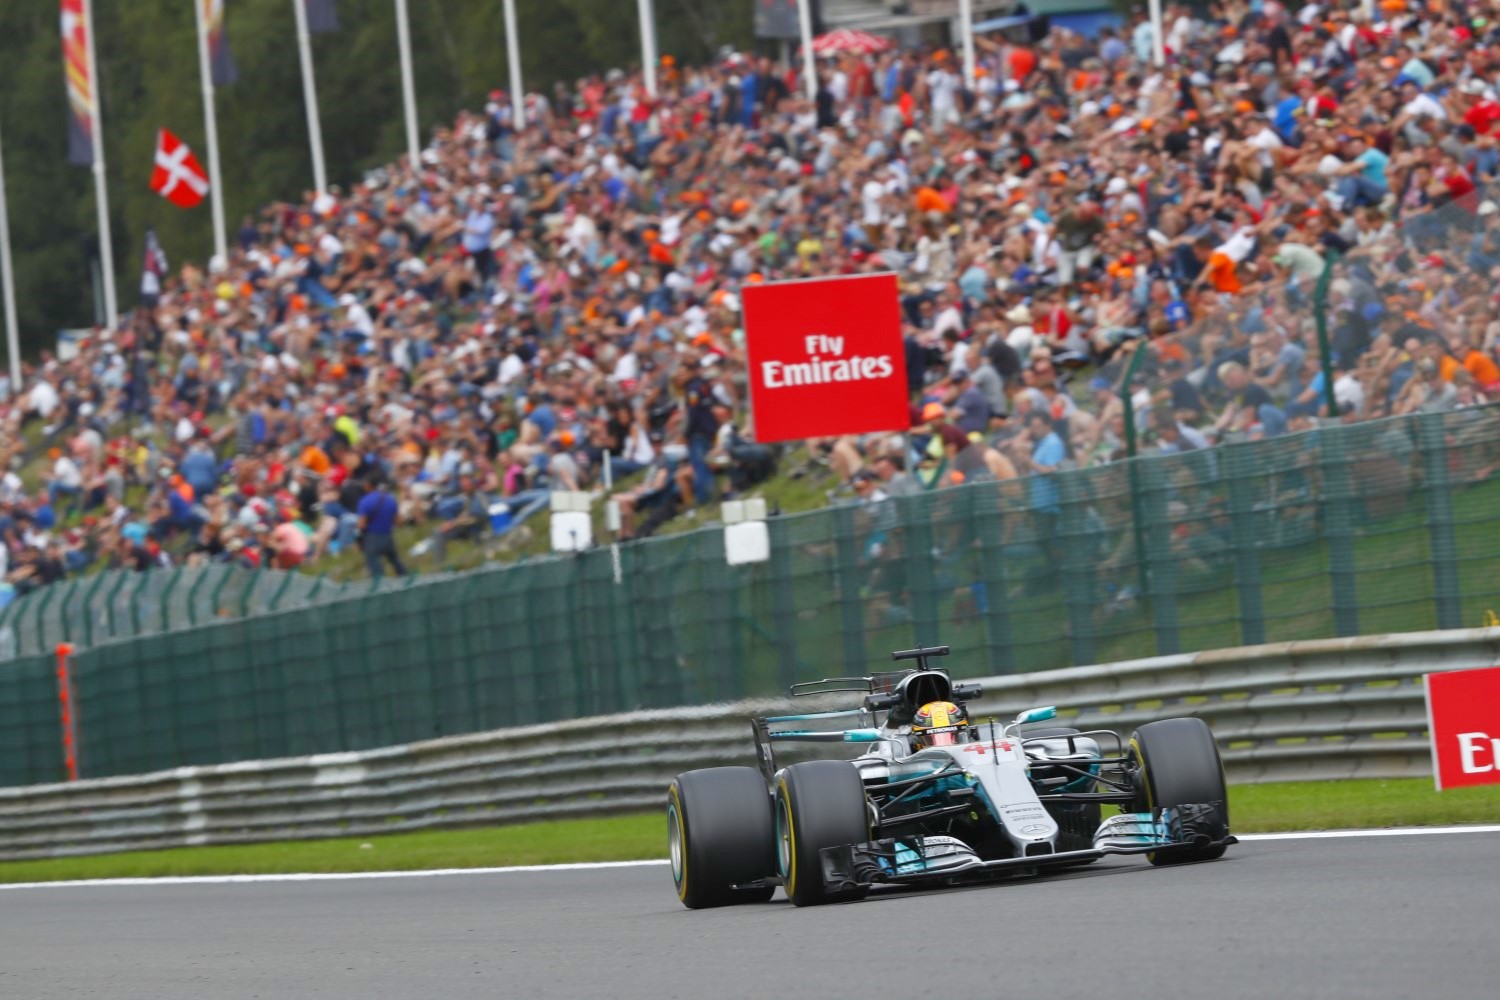 Hamilton before the massive qualifying crowd